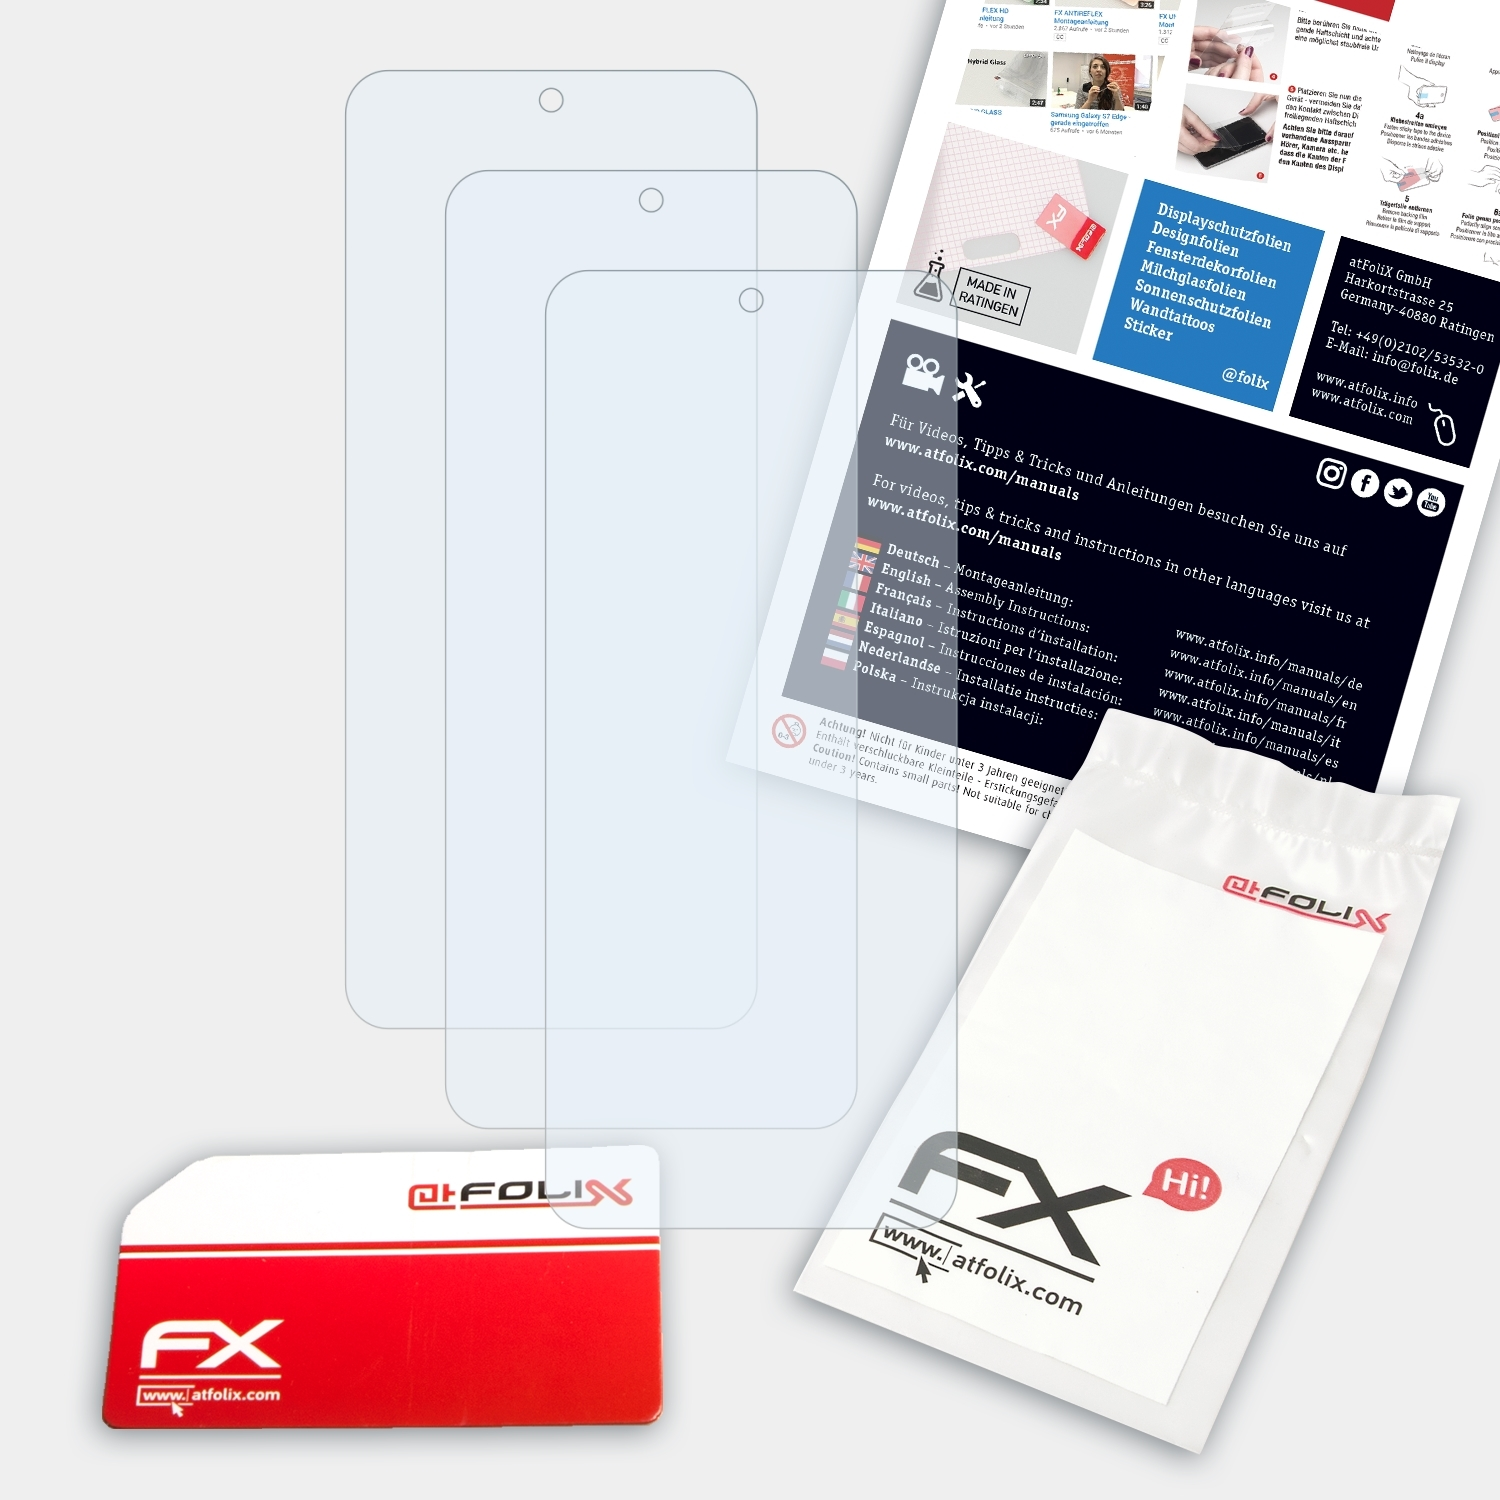 ATFOLIX 3x FX-Clear Displayschutz(für Pro A11 UMiDigi Max)